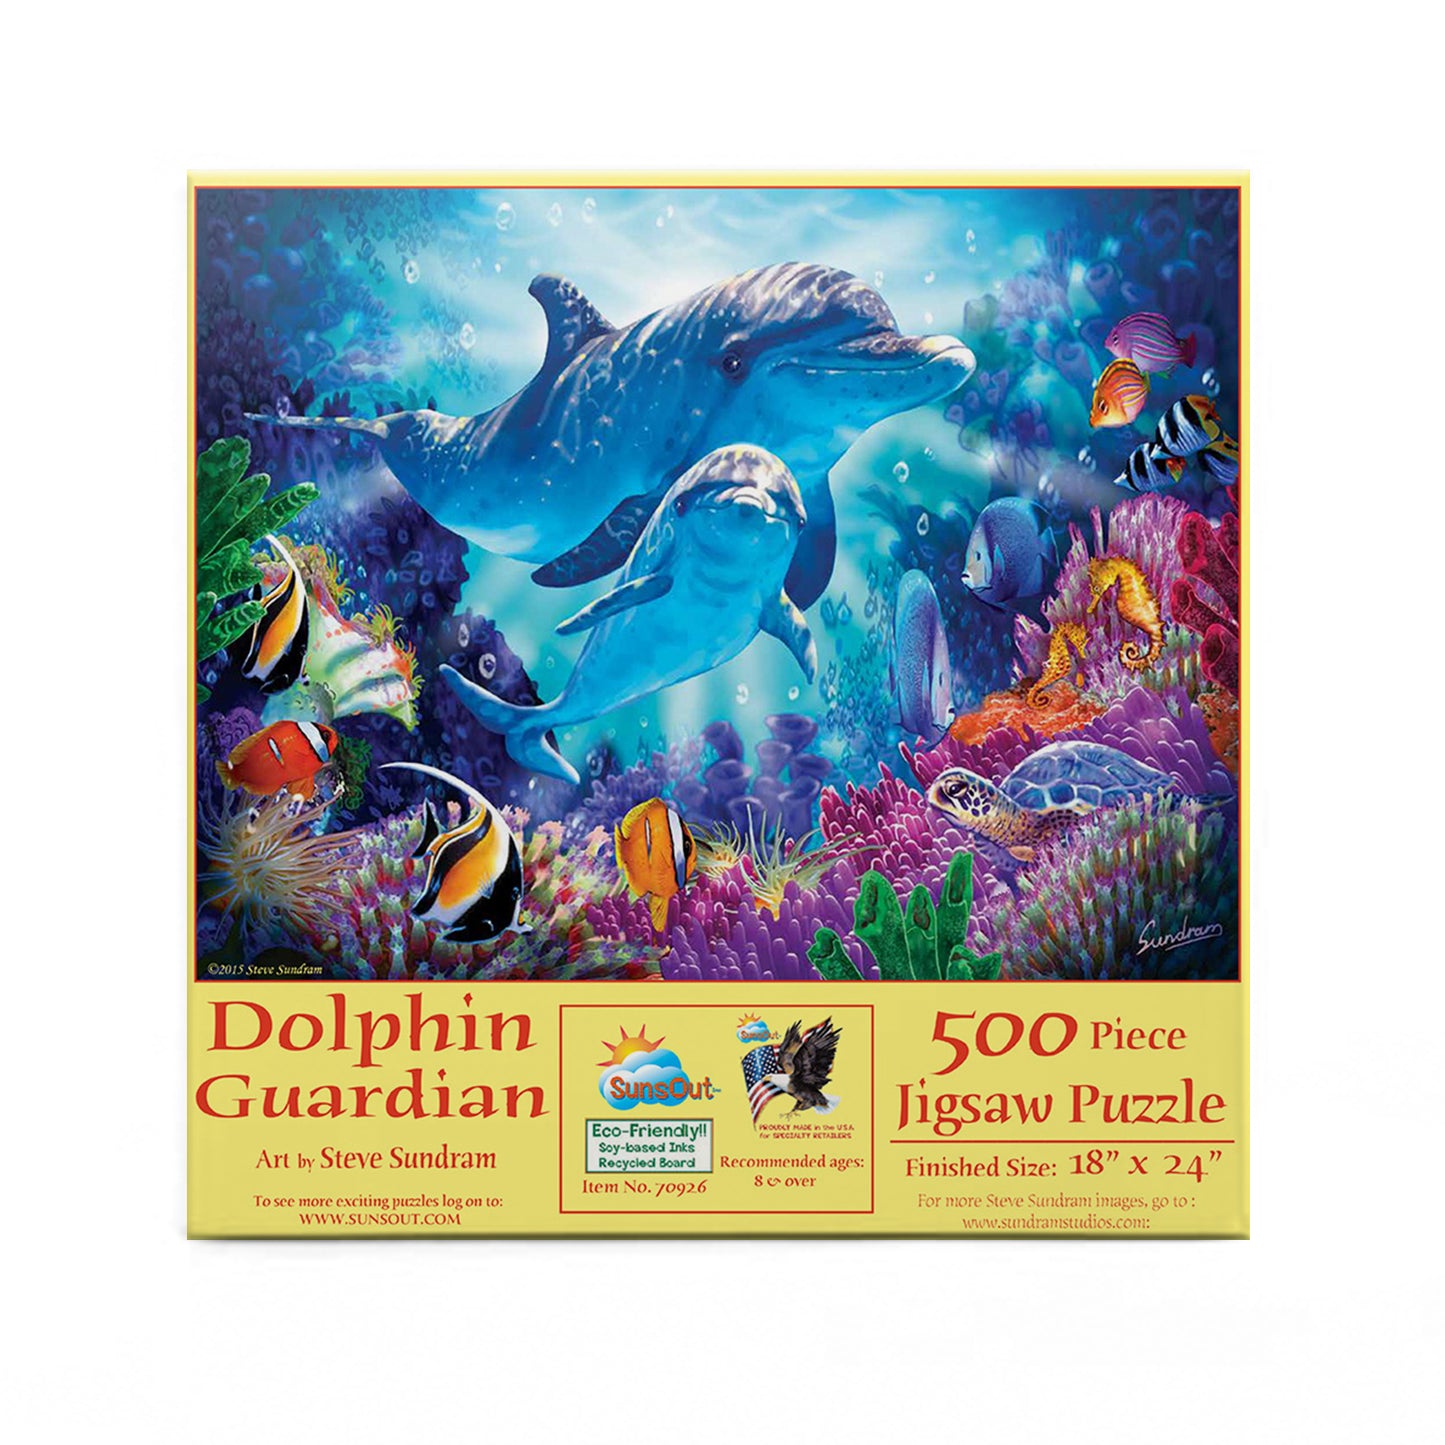 Dolphin Guardian - 500 Piece Jigsaw Puzzle